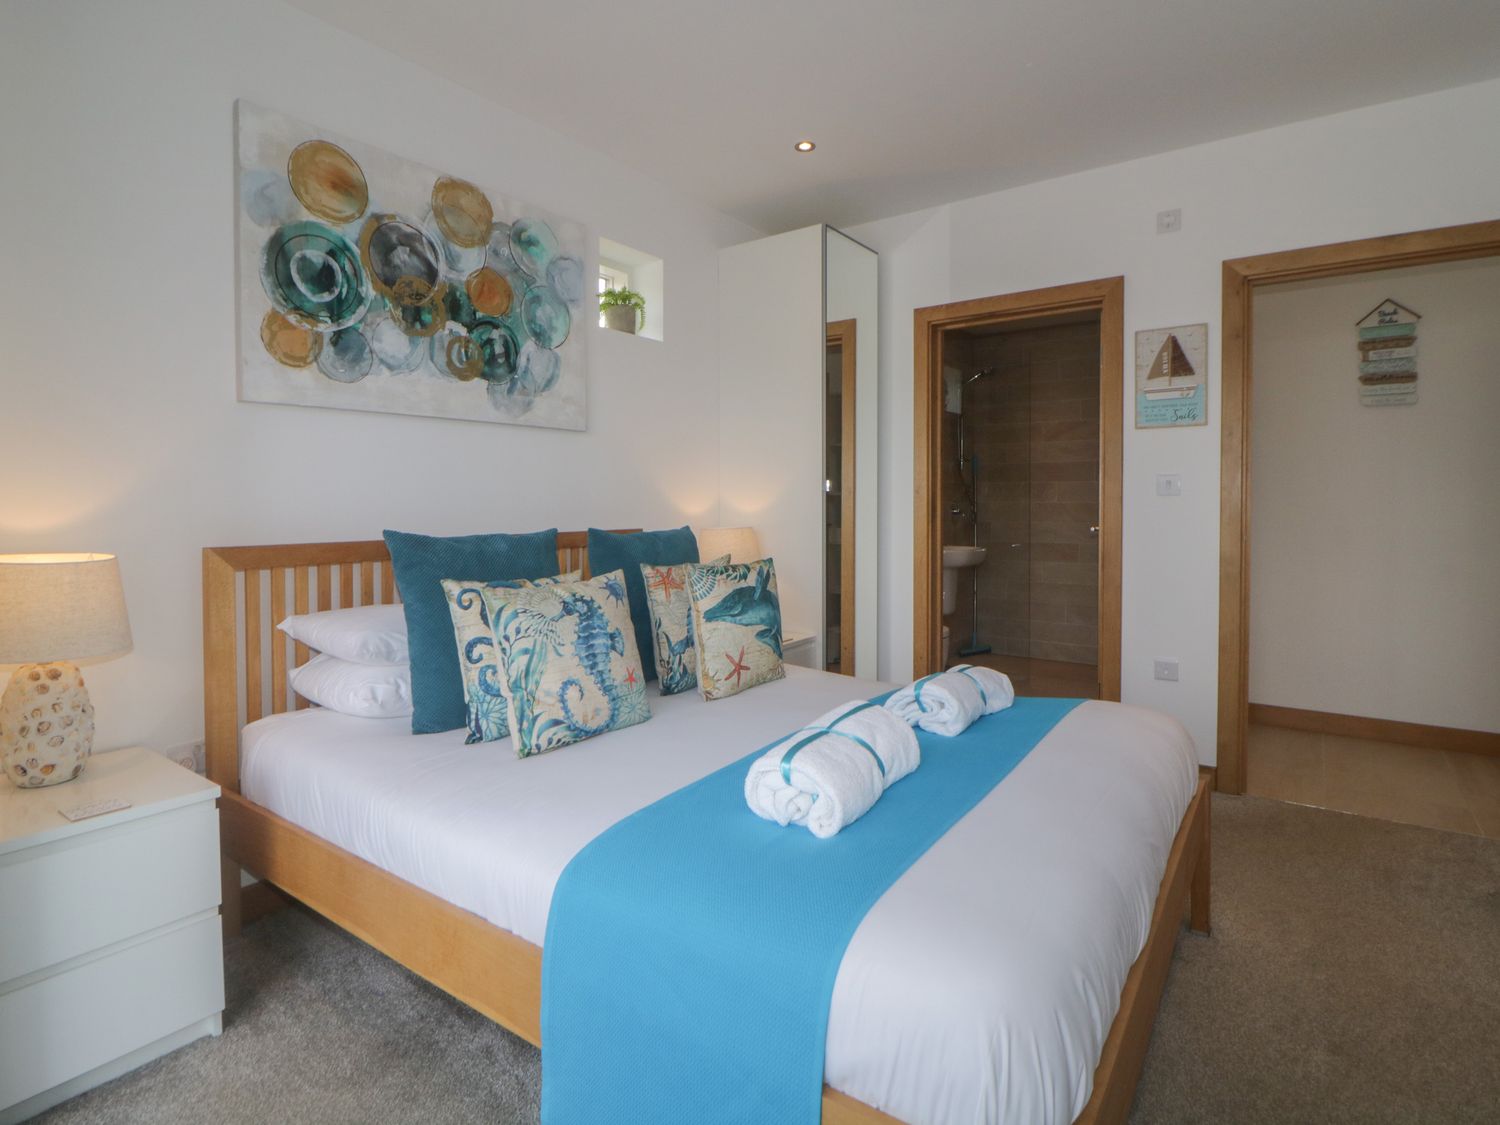 12 Beachdown, Challaborough, Devon. Four-bedroom, contemporary home with countryside views. Hot tub.